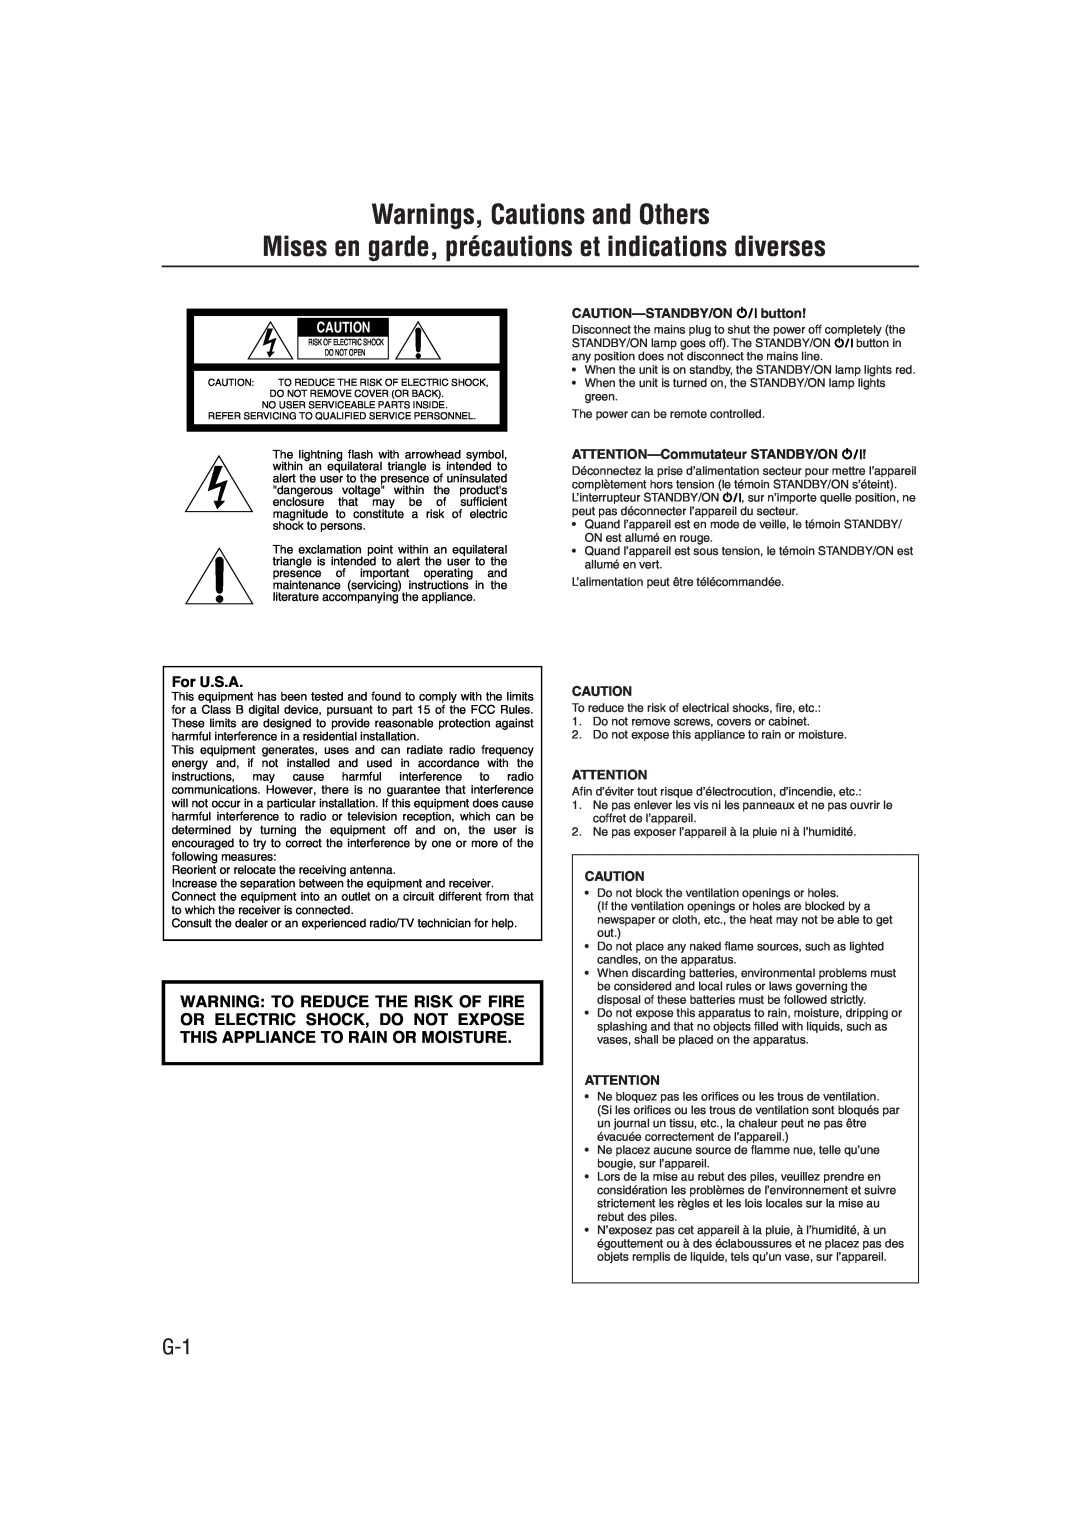 JVC FS-J50, FS-J60 manual Warnings, Cautions and Others, Mises en garde, précautions et indications diverses, For U.S.A 